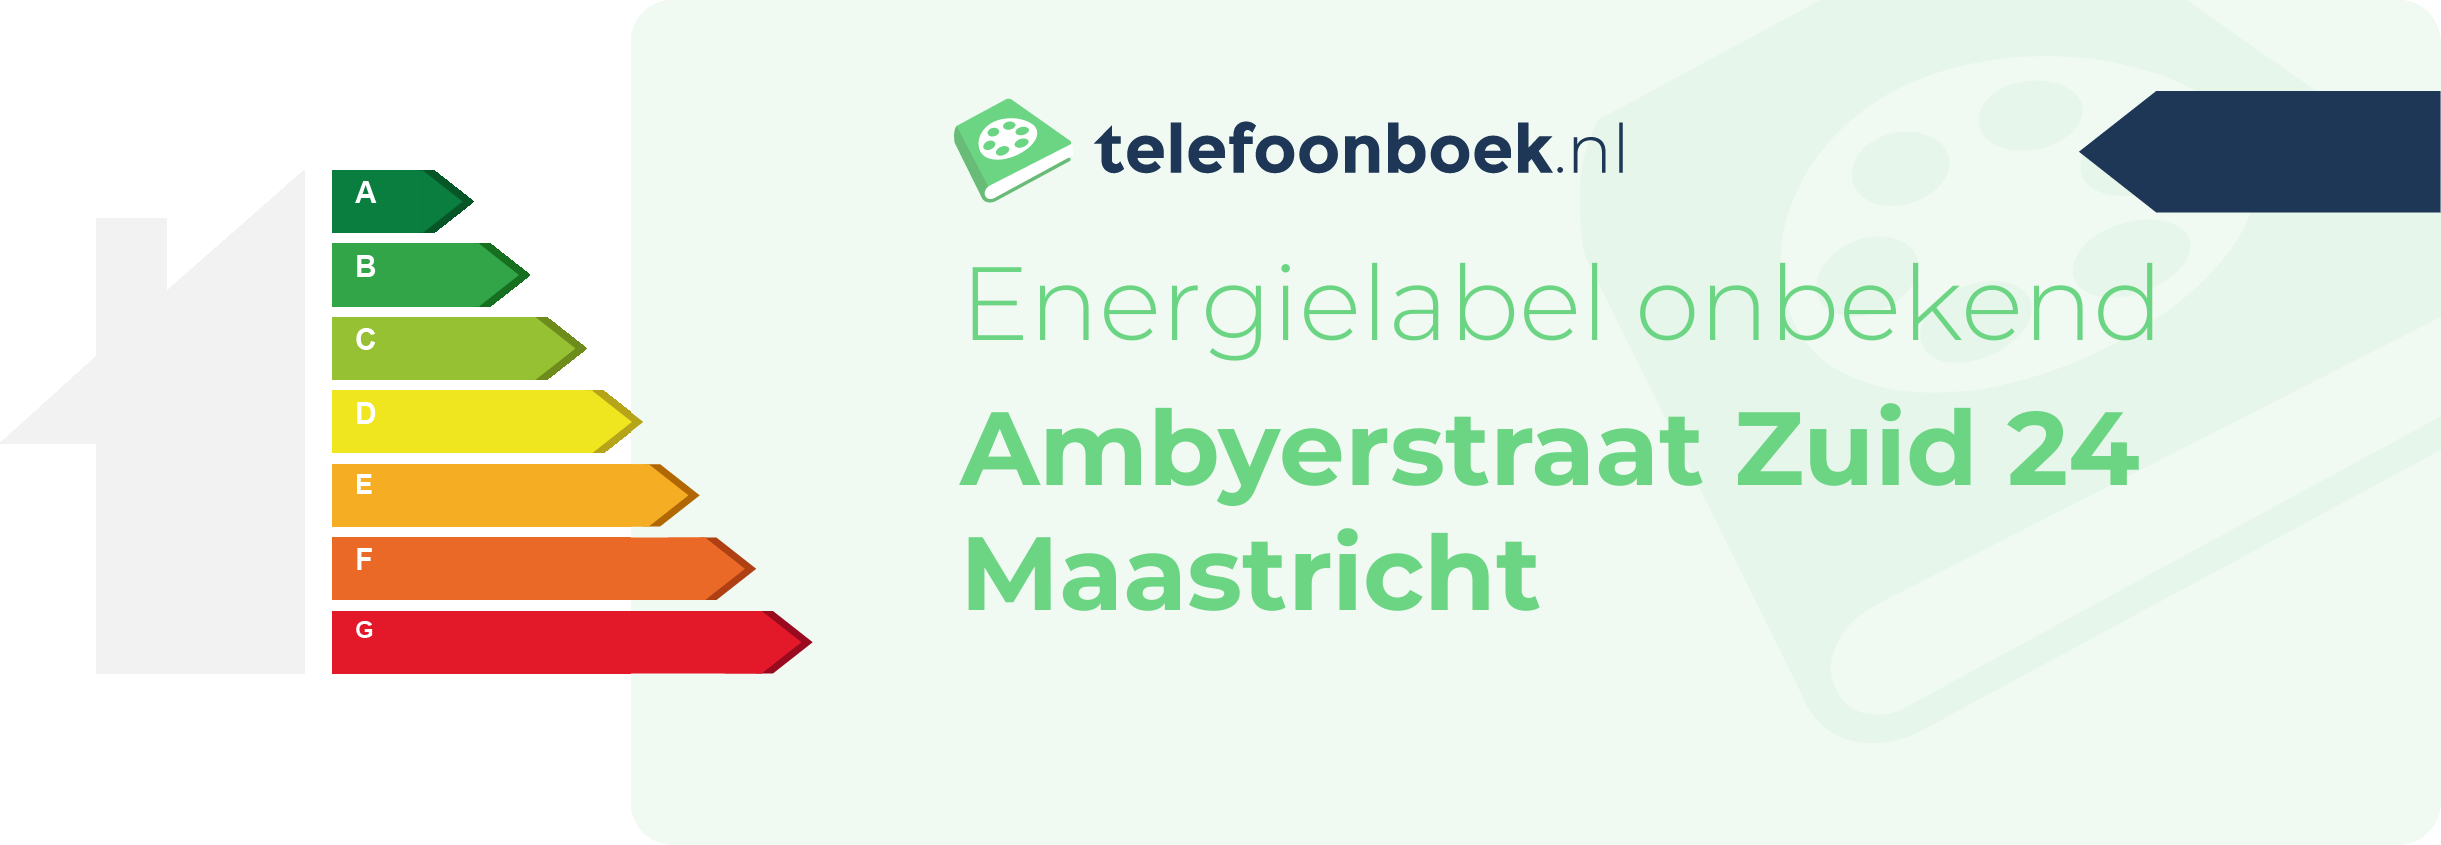 Energielabel Ambyerstraat Zuid 24 Maastricht